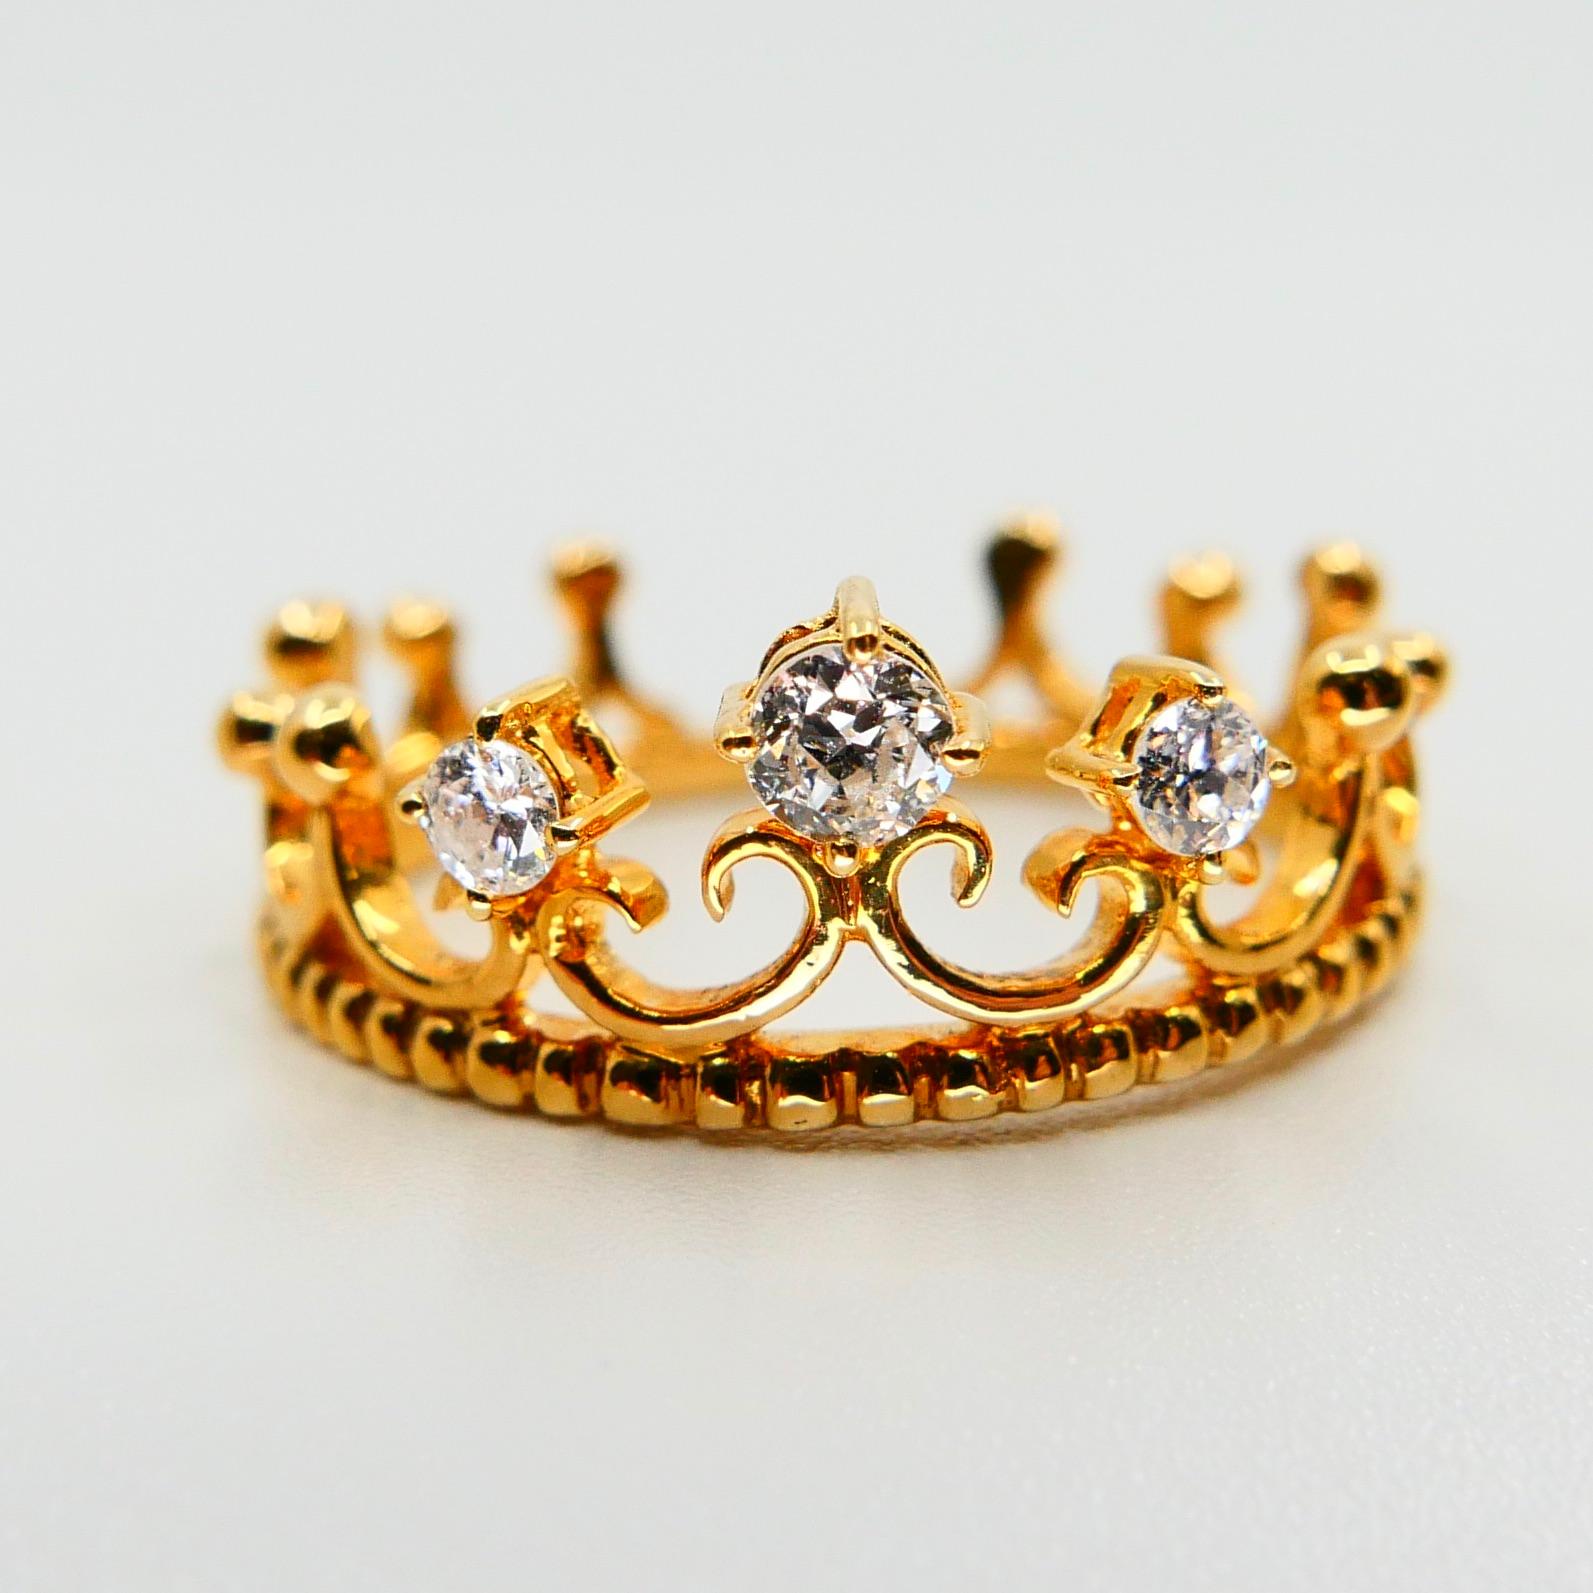 Women's 18 Karat Gold Three-Stone Crown Ring with Old Mine Cut Diamonds. 0.22 Carat